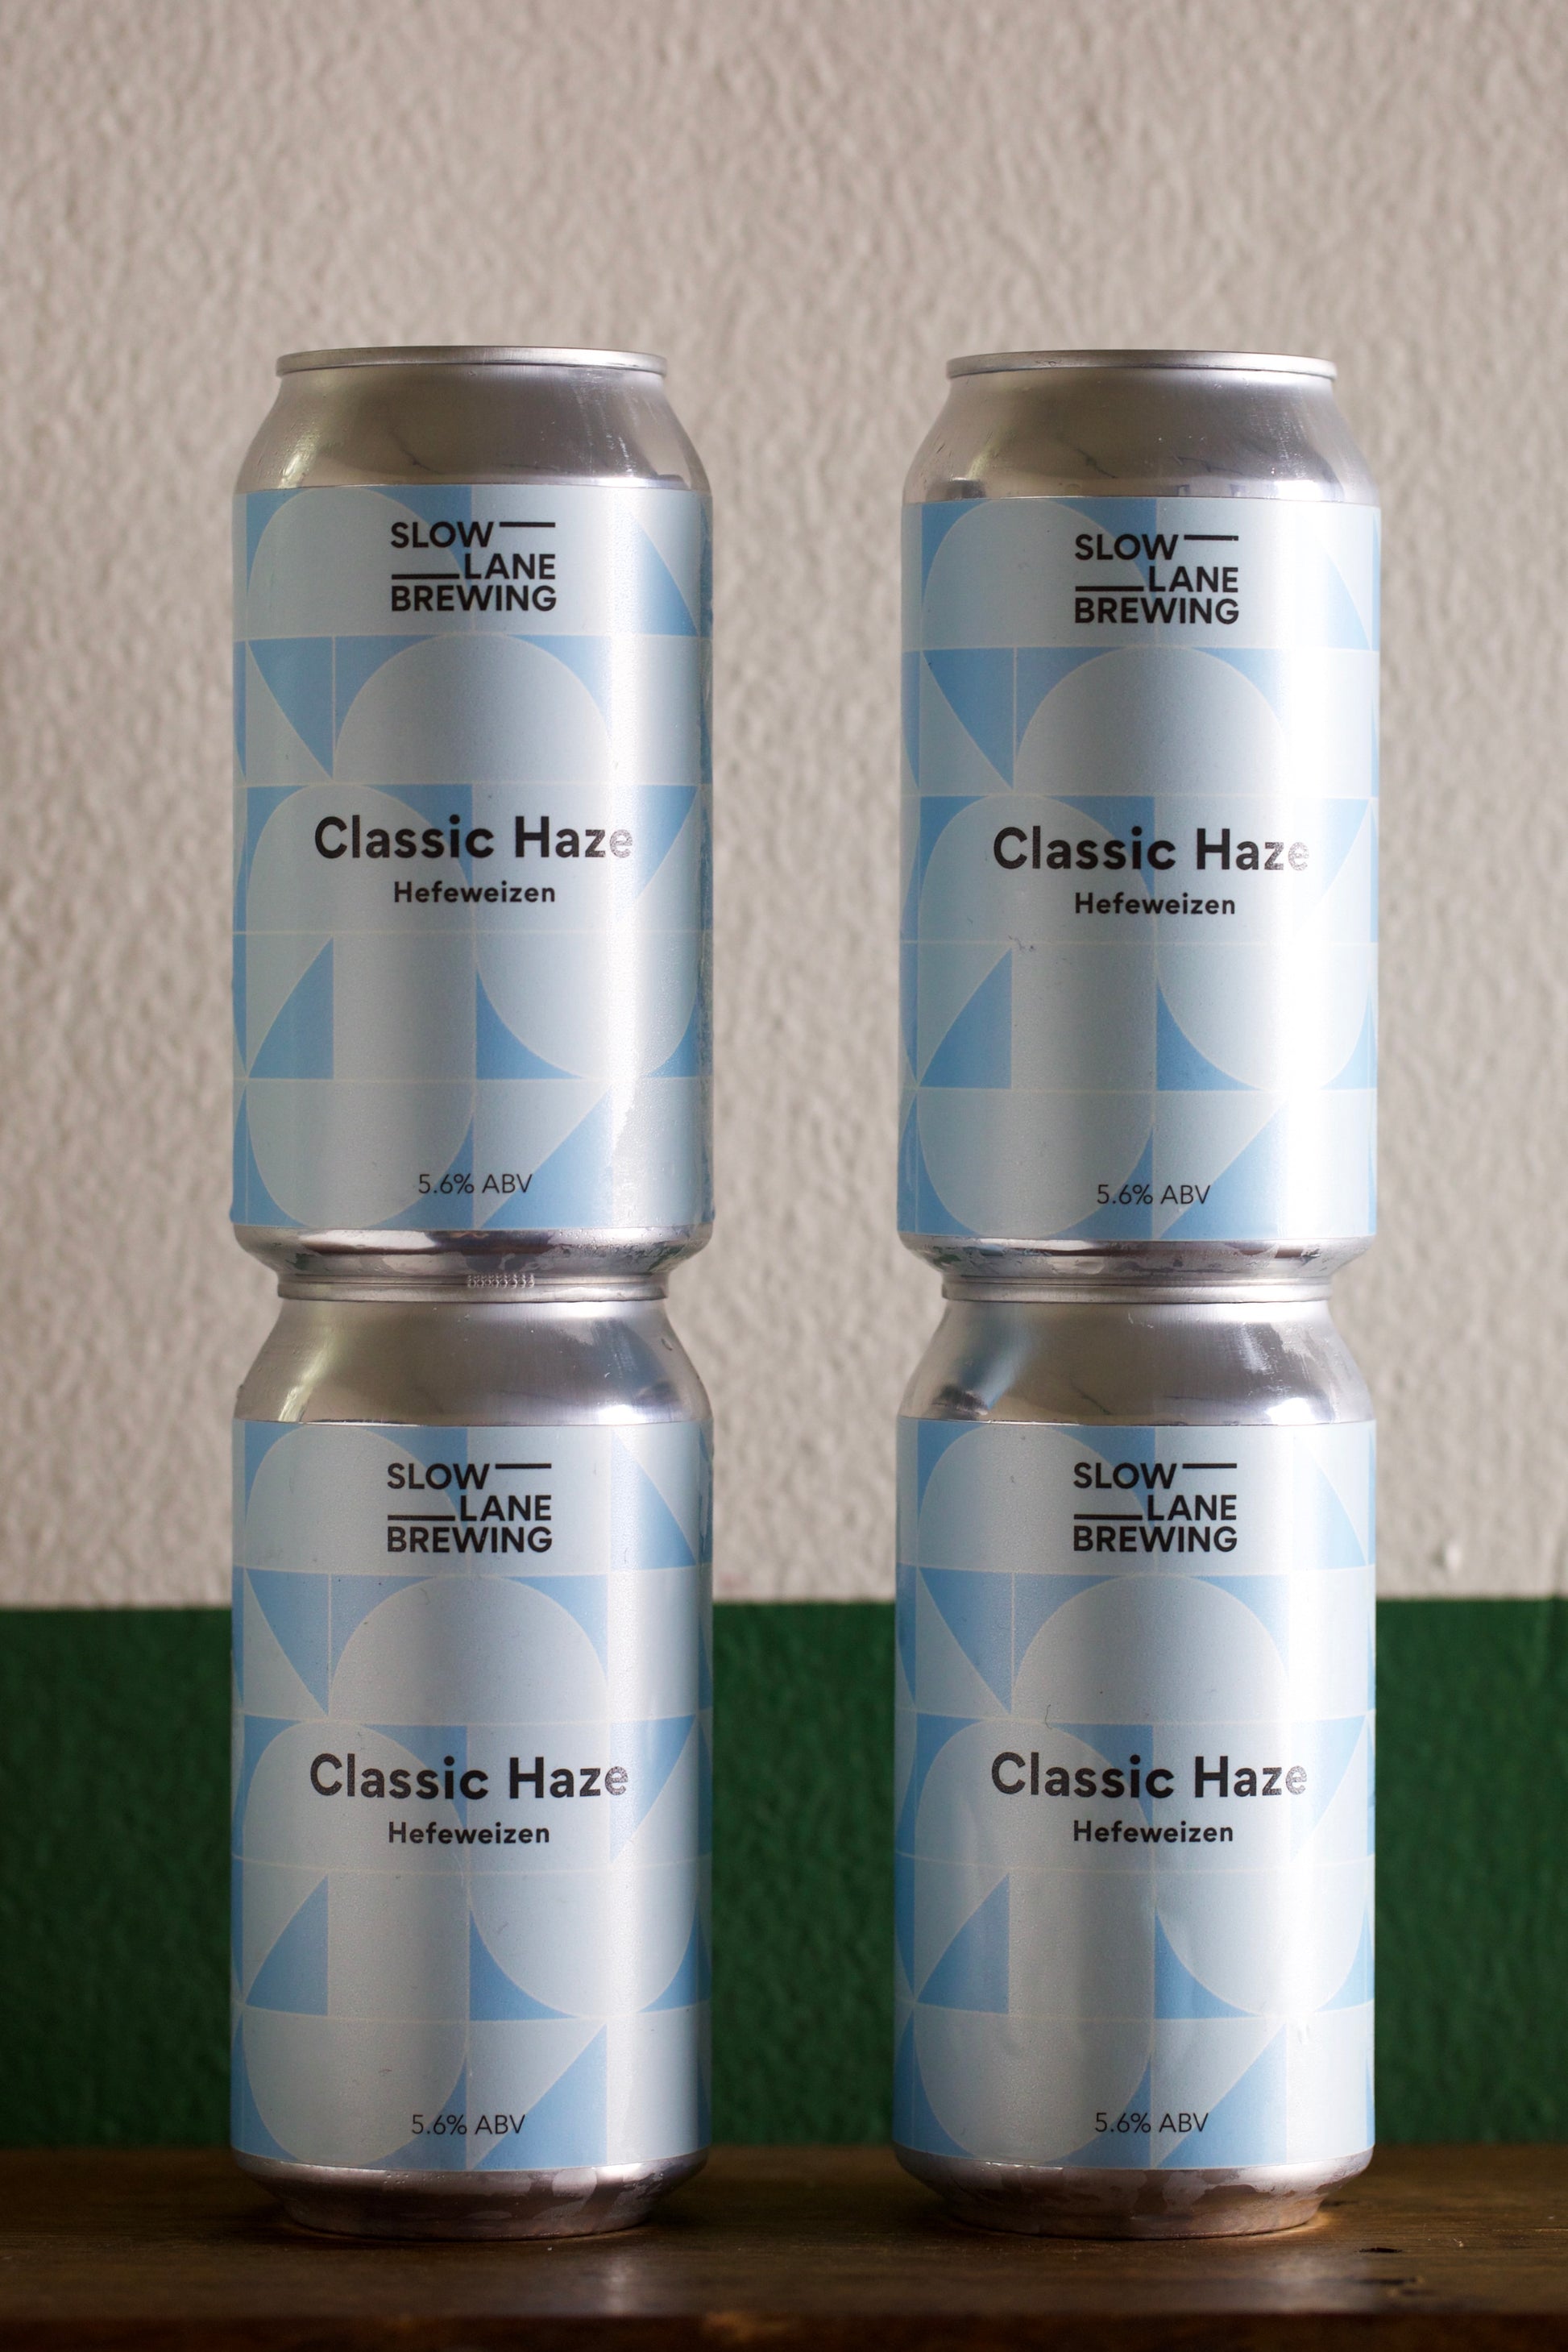 4 cans of Slow Lane 'Classic Haze' Hefeweizen 375ml each